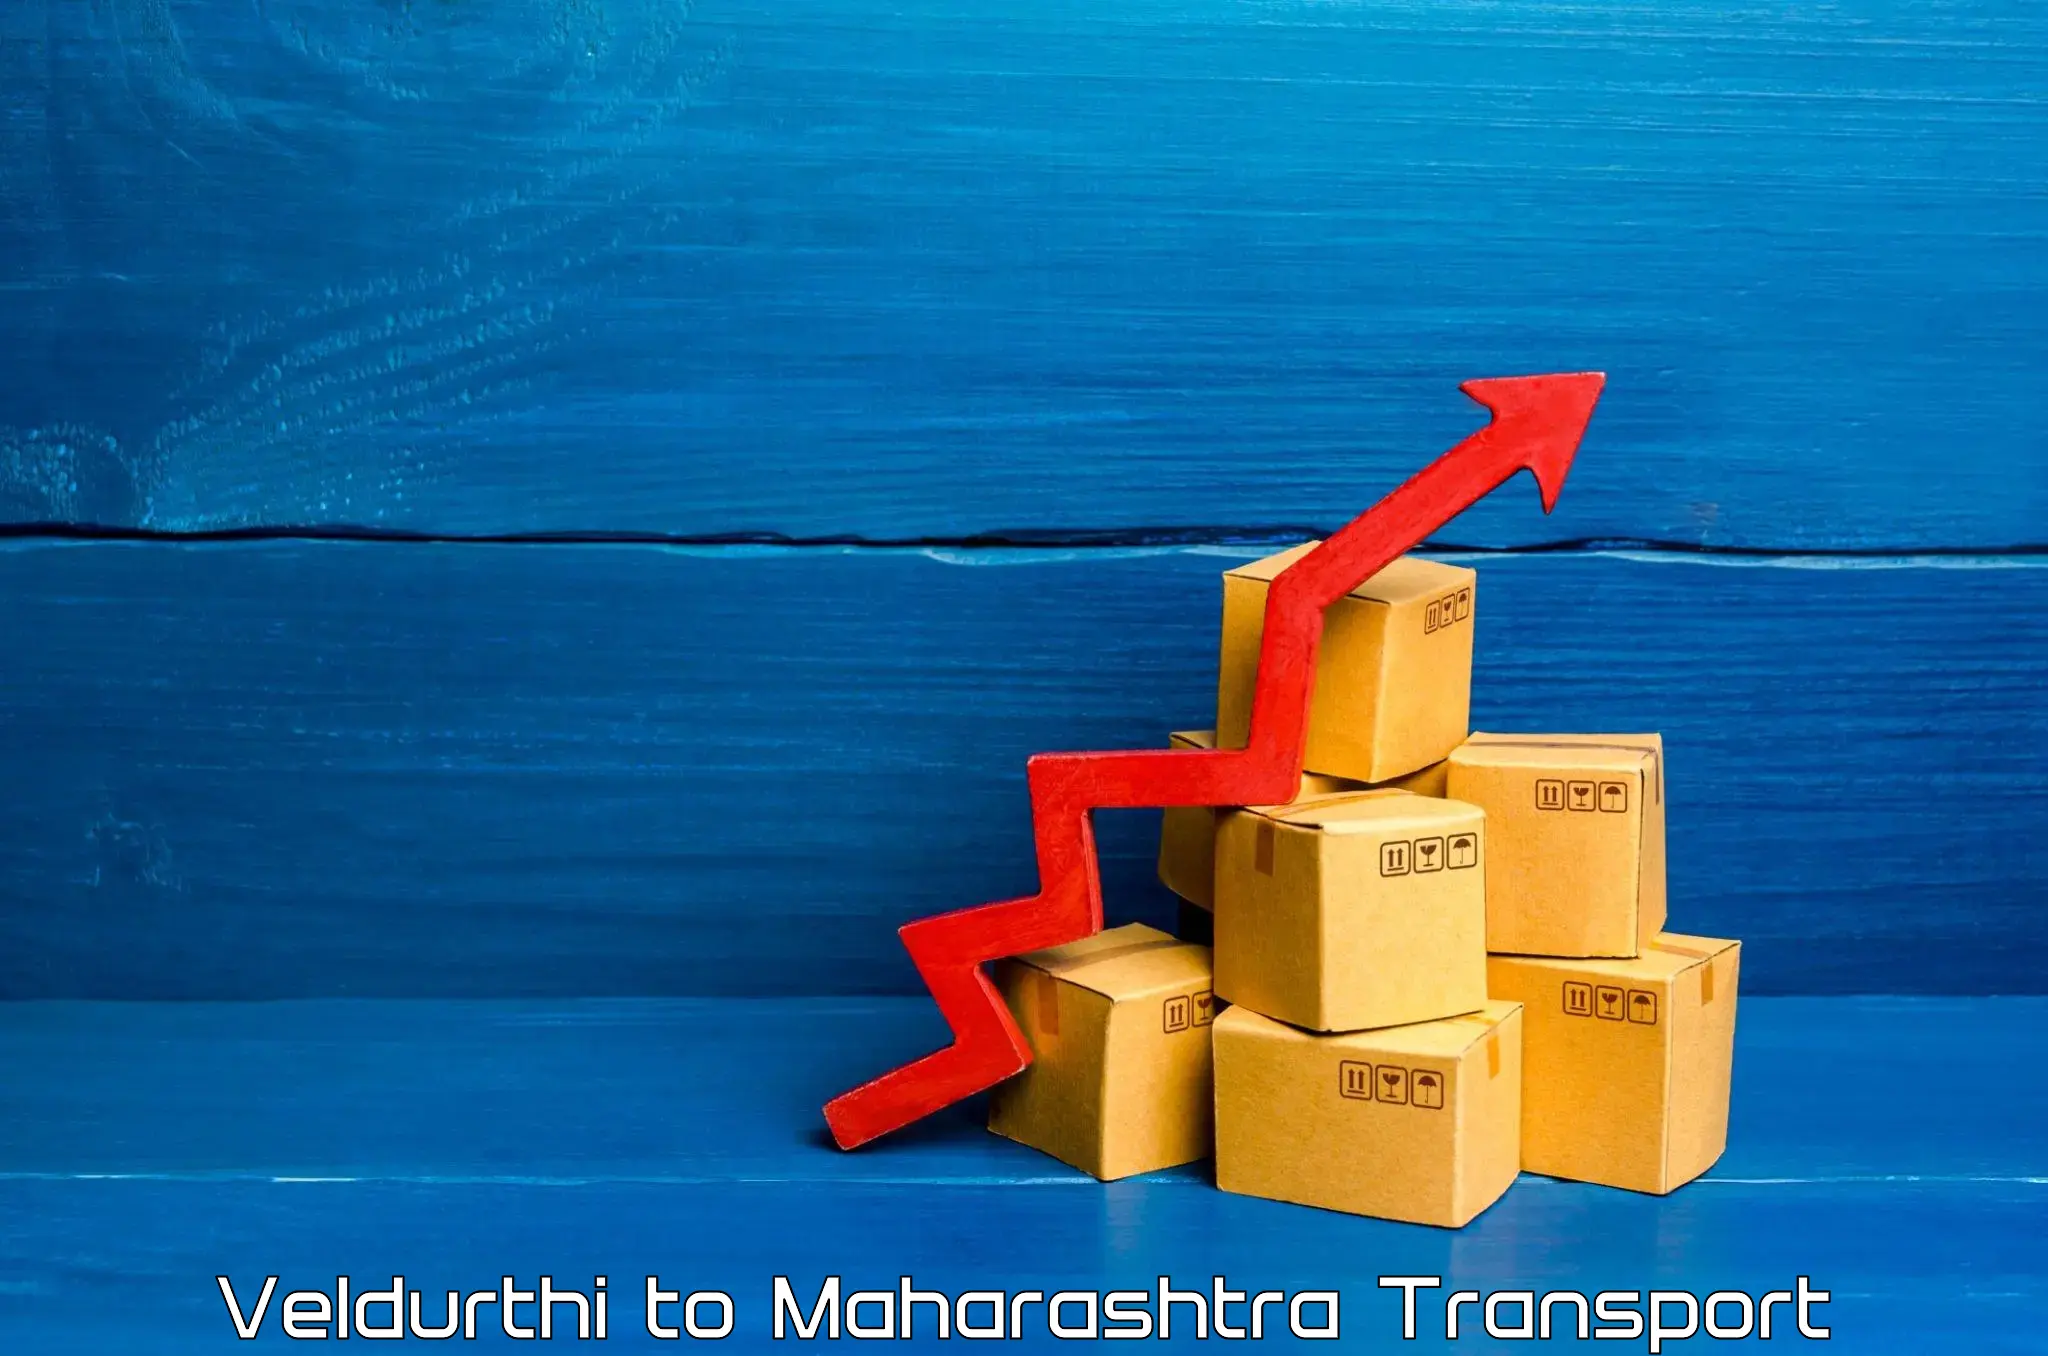 Truck transport companies in India Veldurthi to Maharashtra